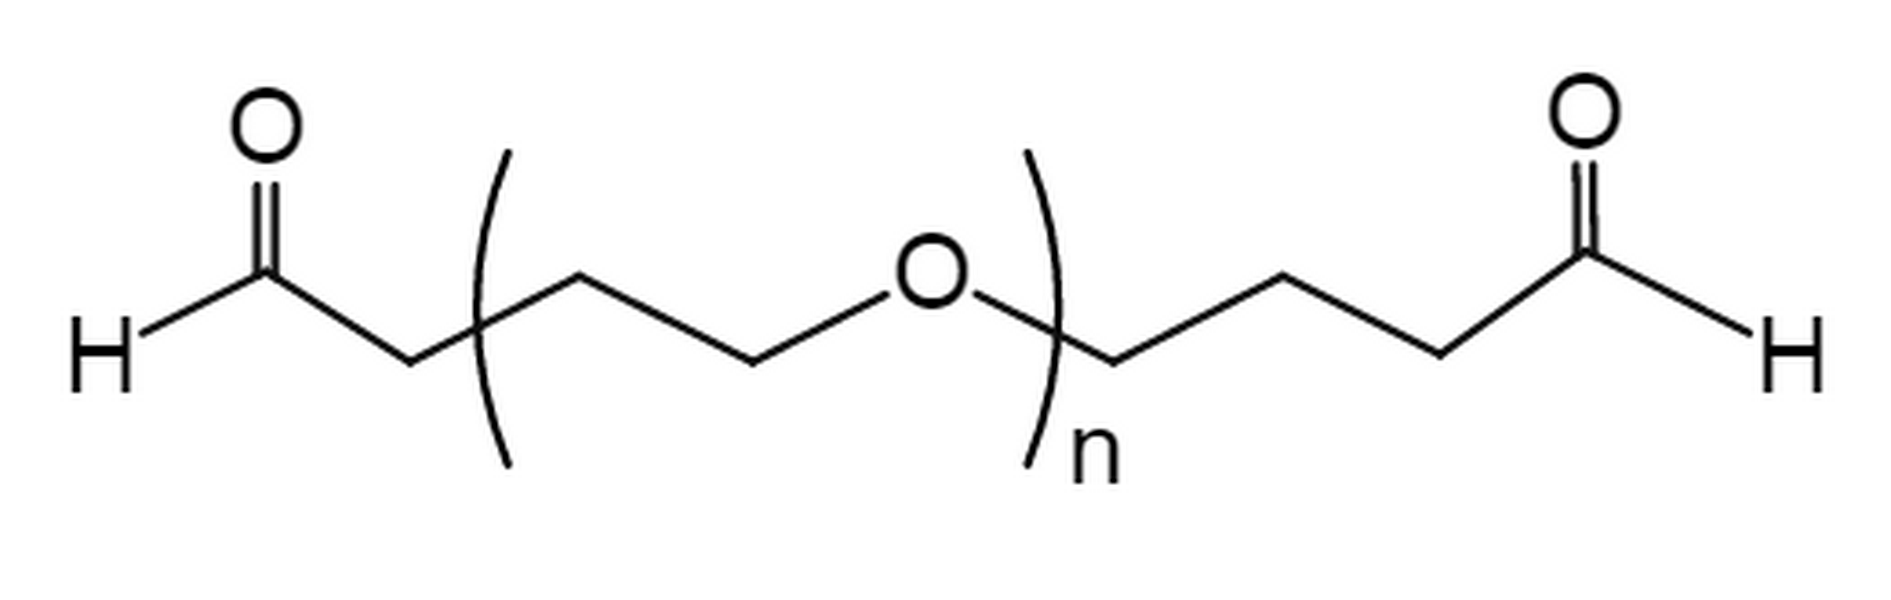 ButyrAldehyde-PEG-ButyrAldehyde, MW 35K